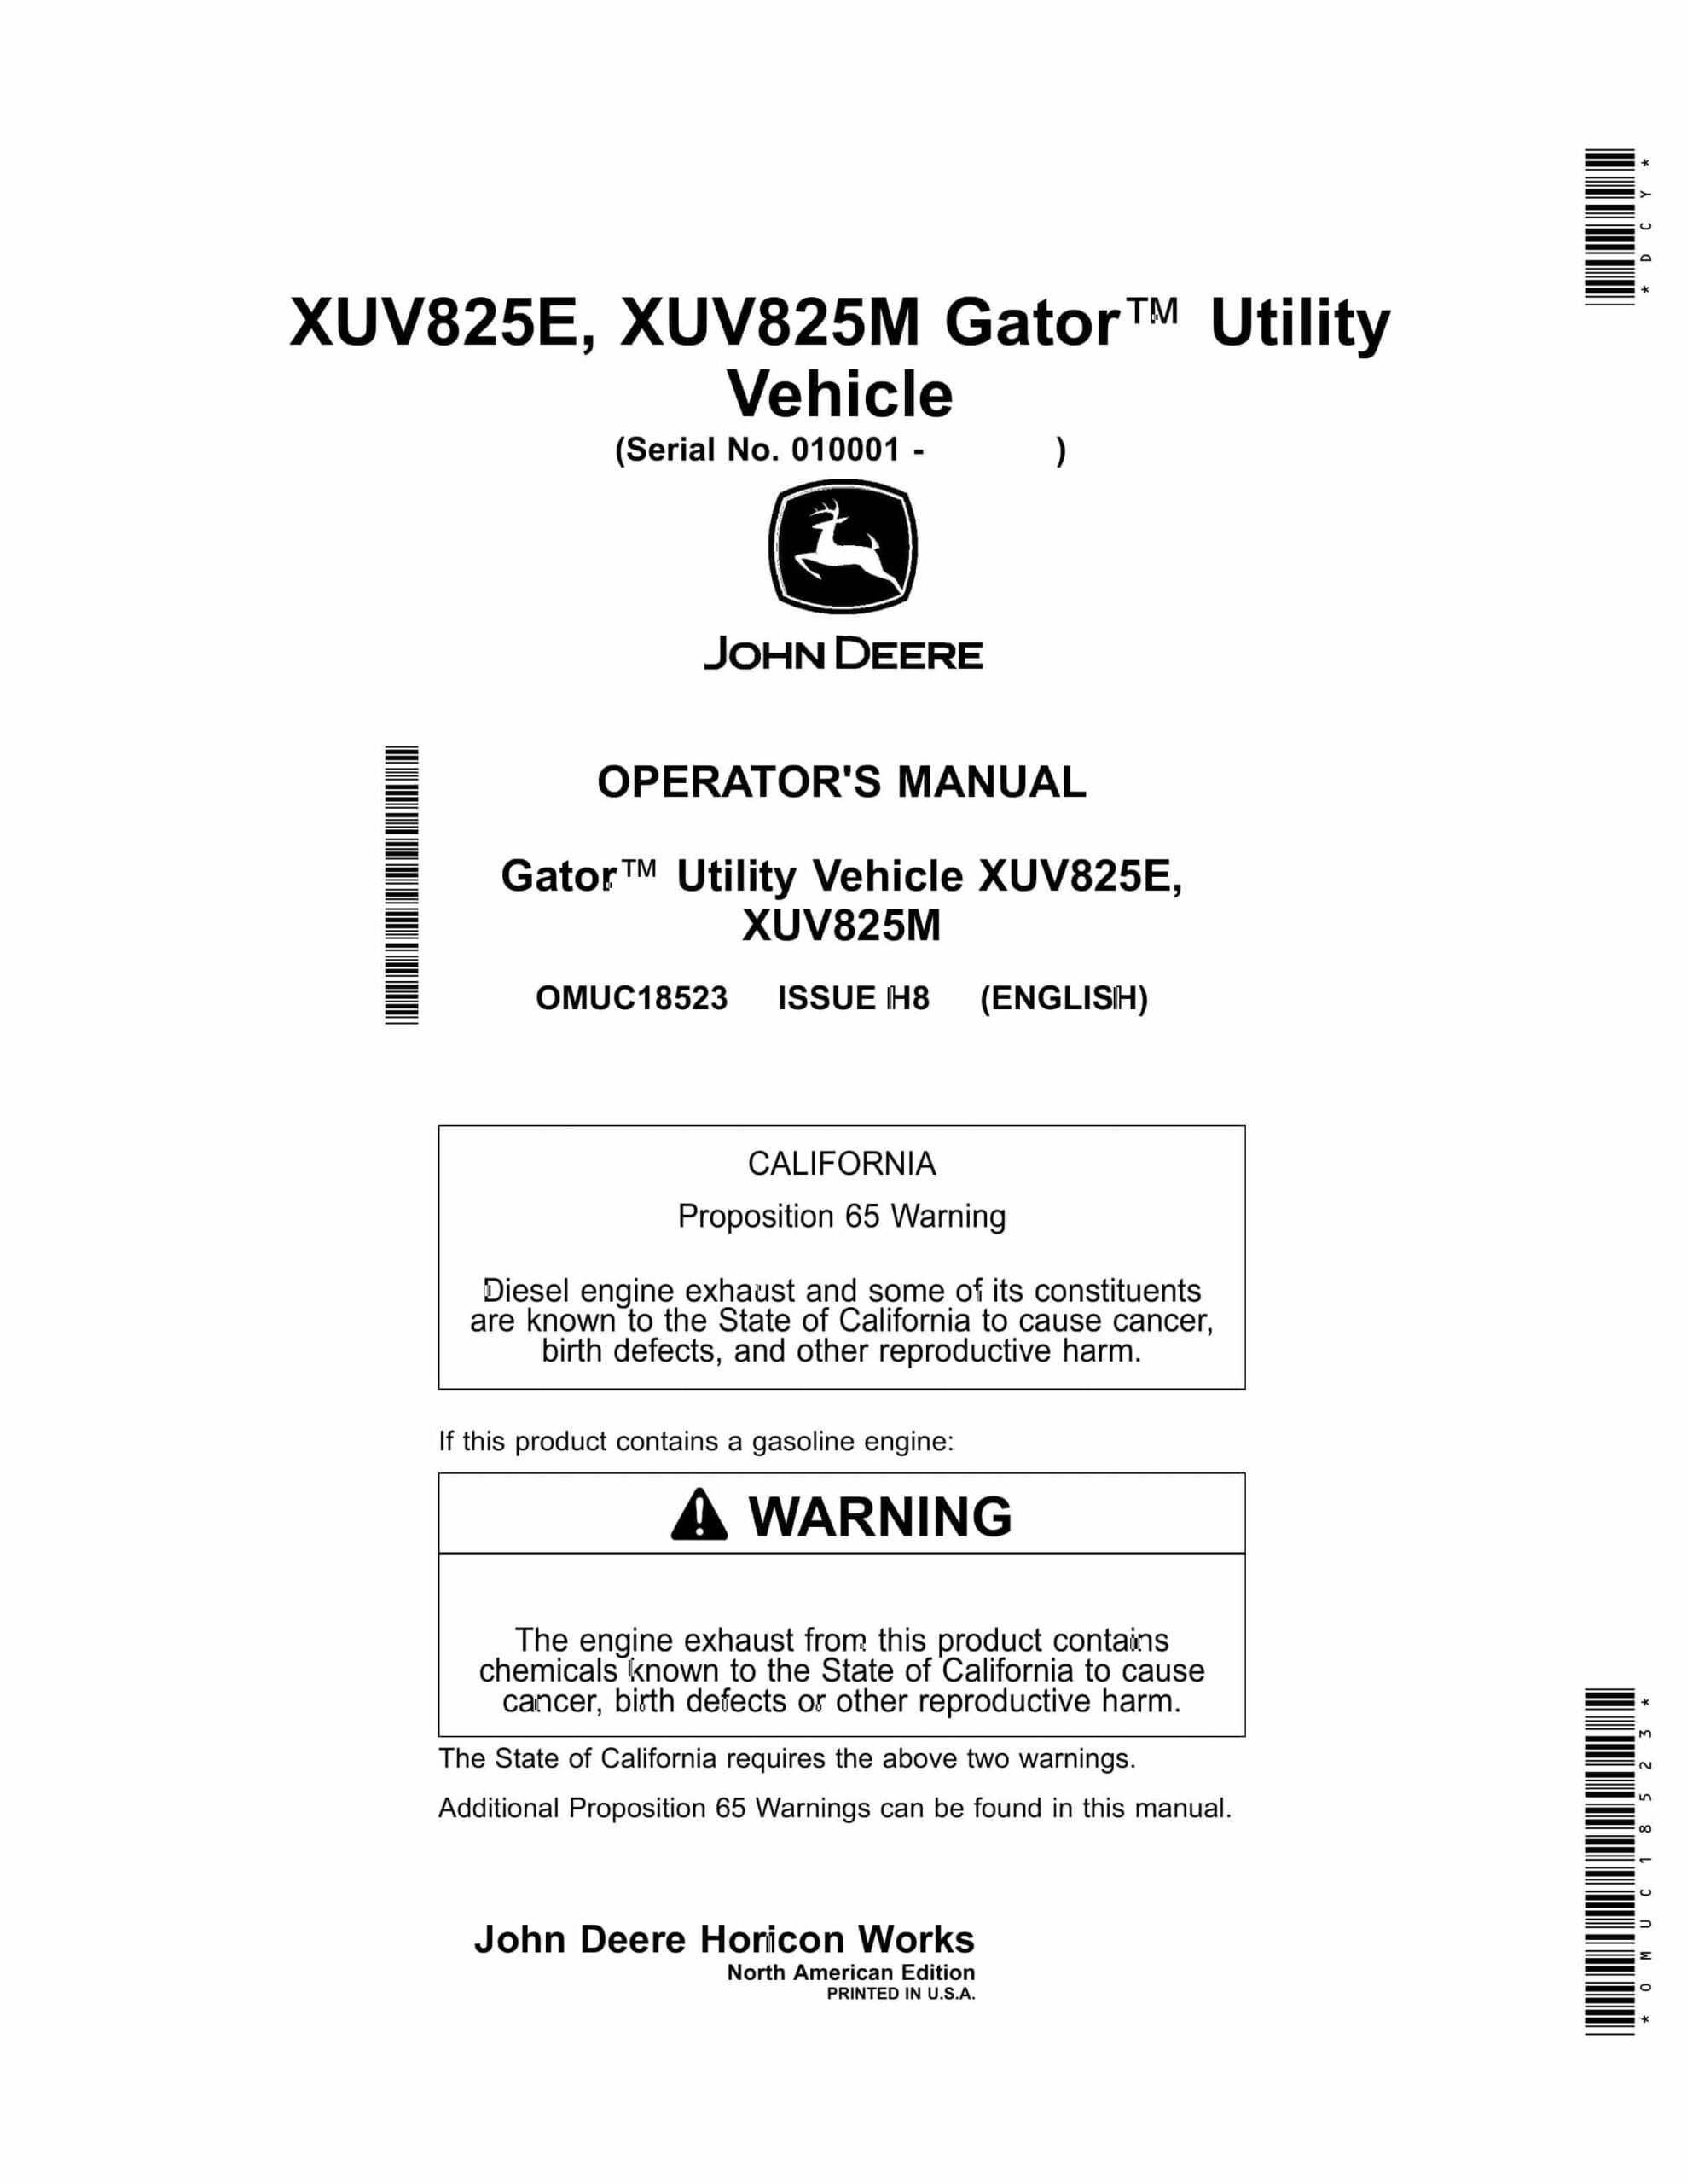 John Deere XUV825E, XUV825M Gator Utility Vehicles Operator Manual OMUC18523-1